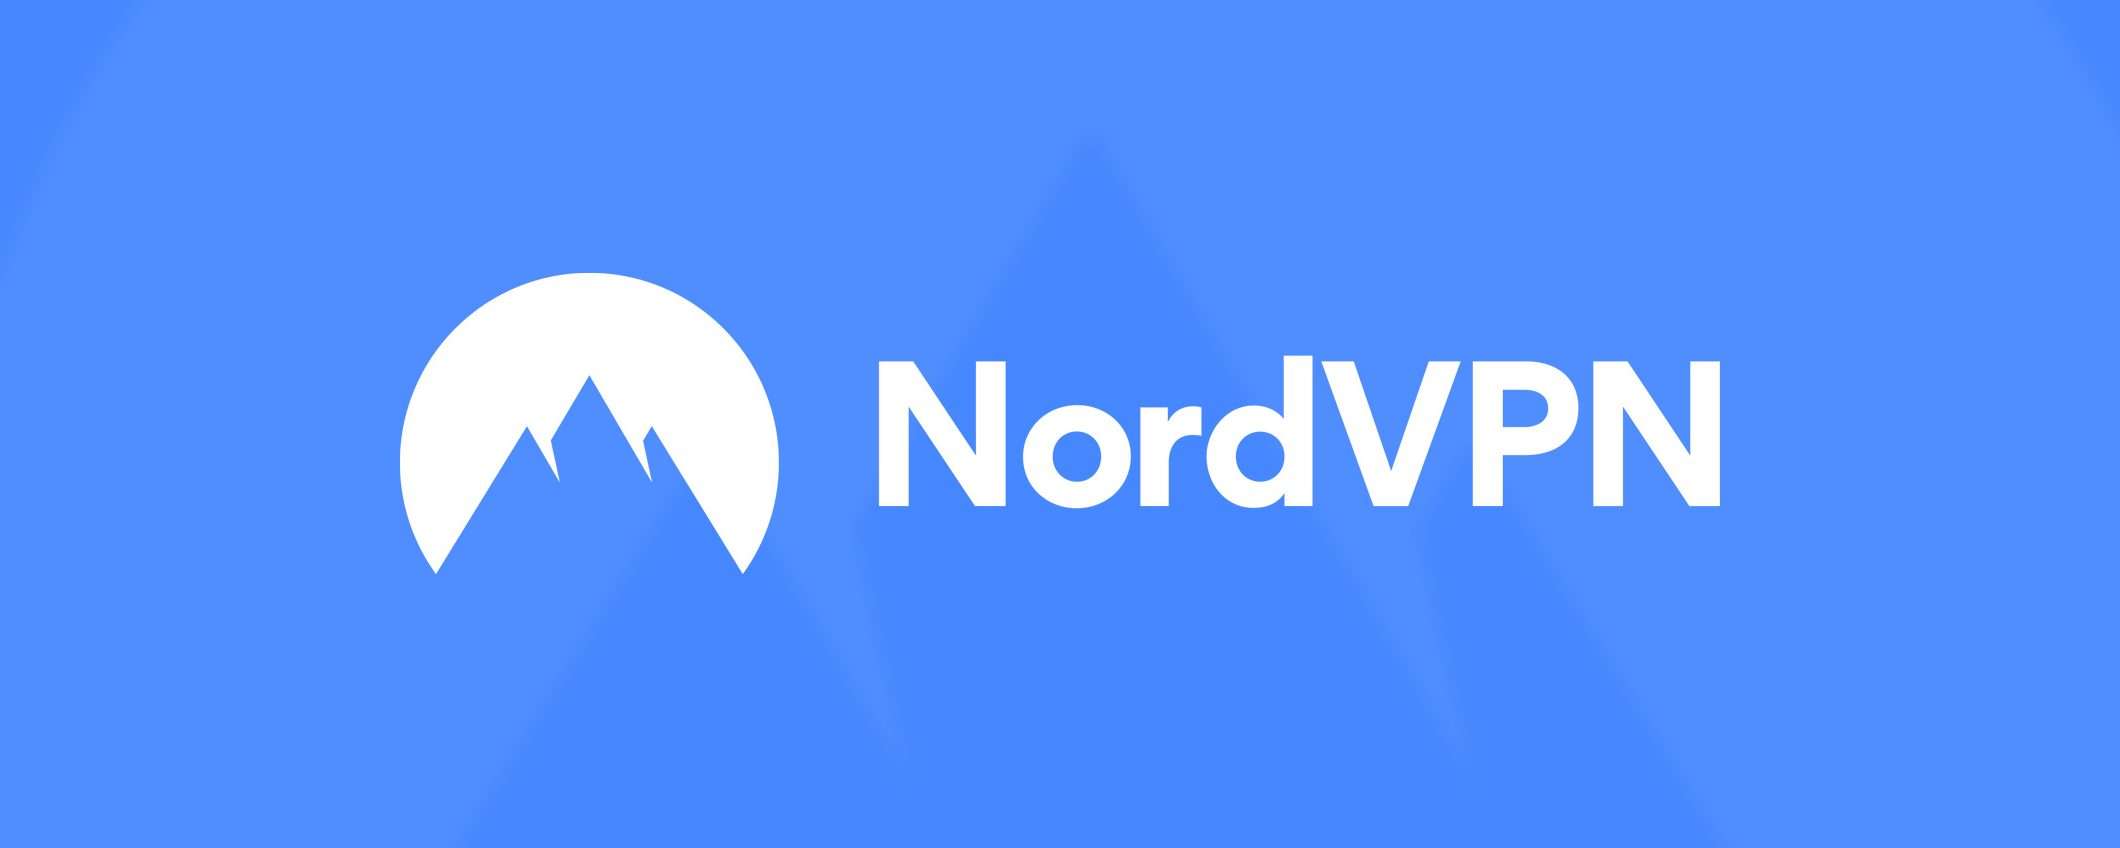 Nord Security (NordVPN) sponsor di ICT Spring